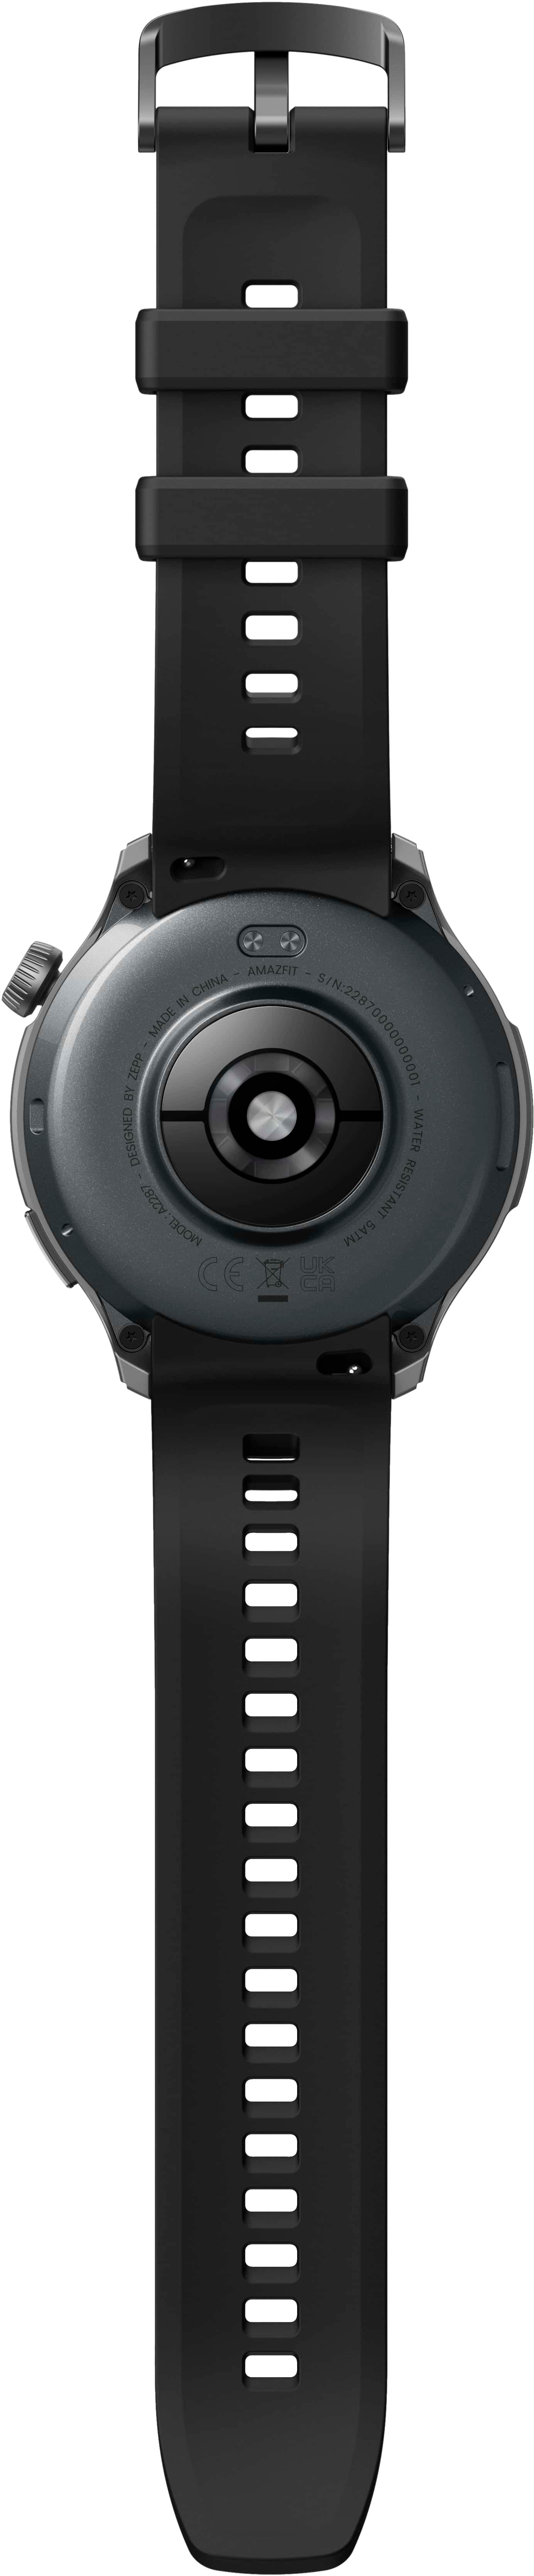 Buy Amazfit Balance Smart Watch @ ₹24999.0